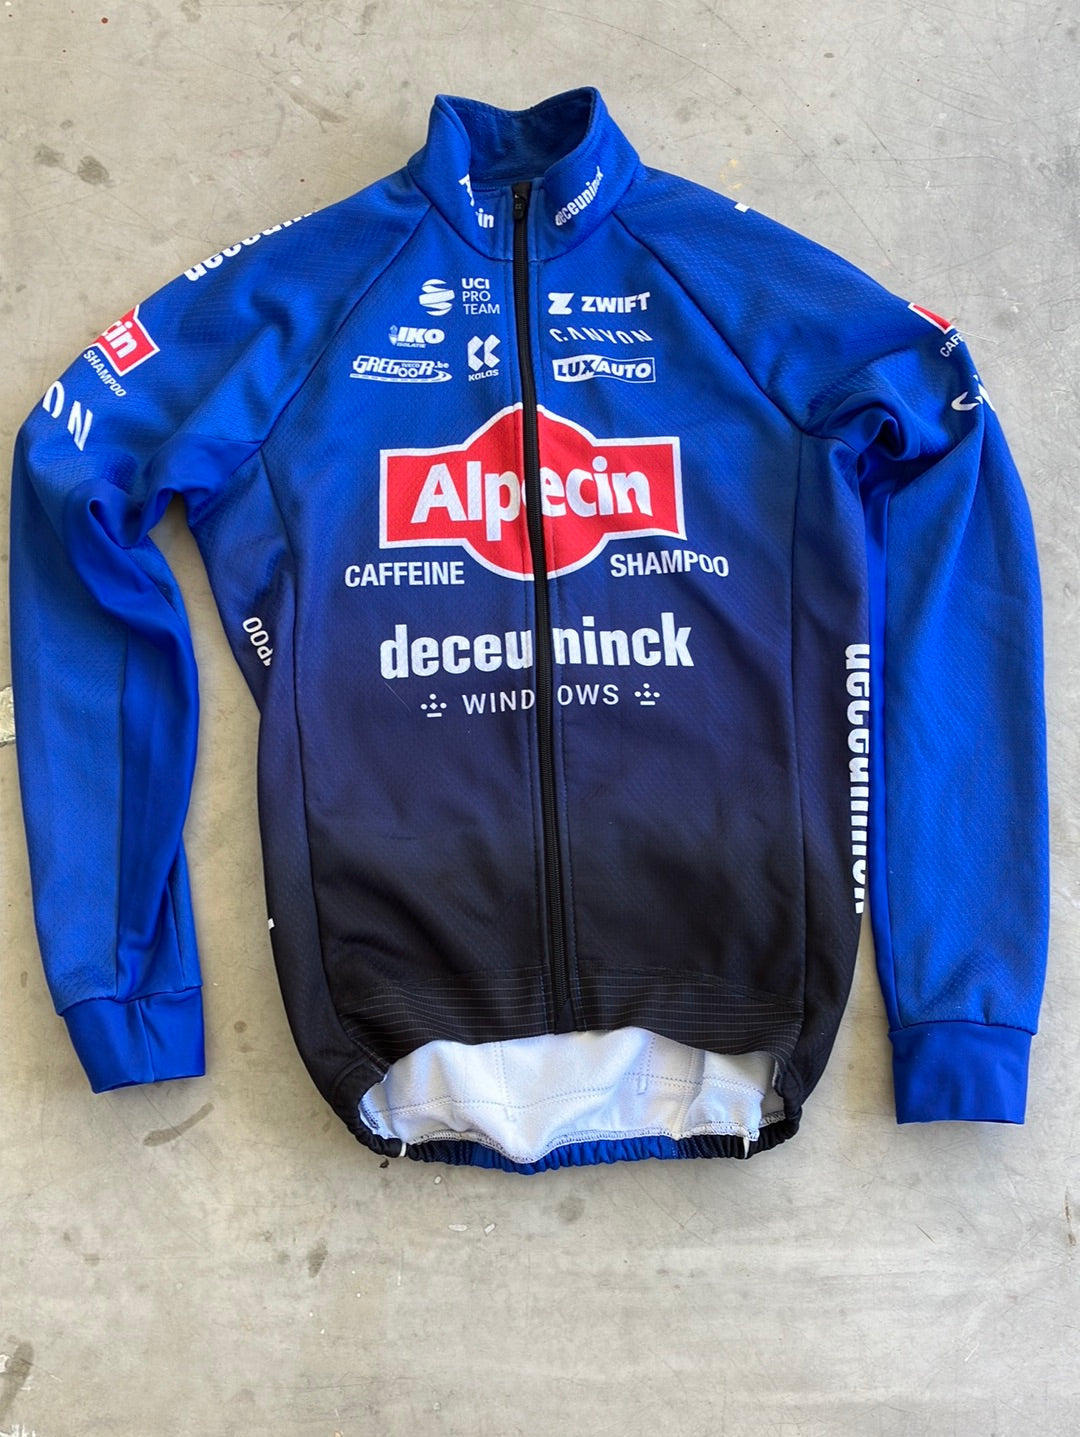 Winter Jacket - Thermal windproof water resistant cycling Jacket/Jersey | Kalas | Blue | Alpecin Deceuninck | Pro Cycling Kit